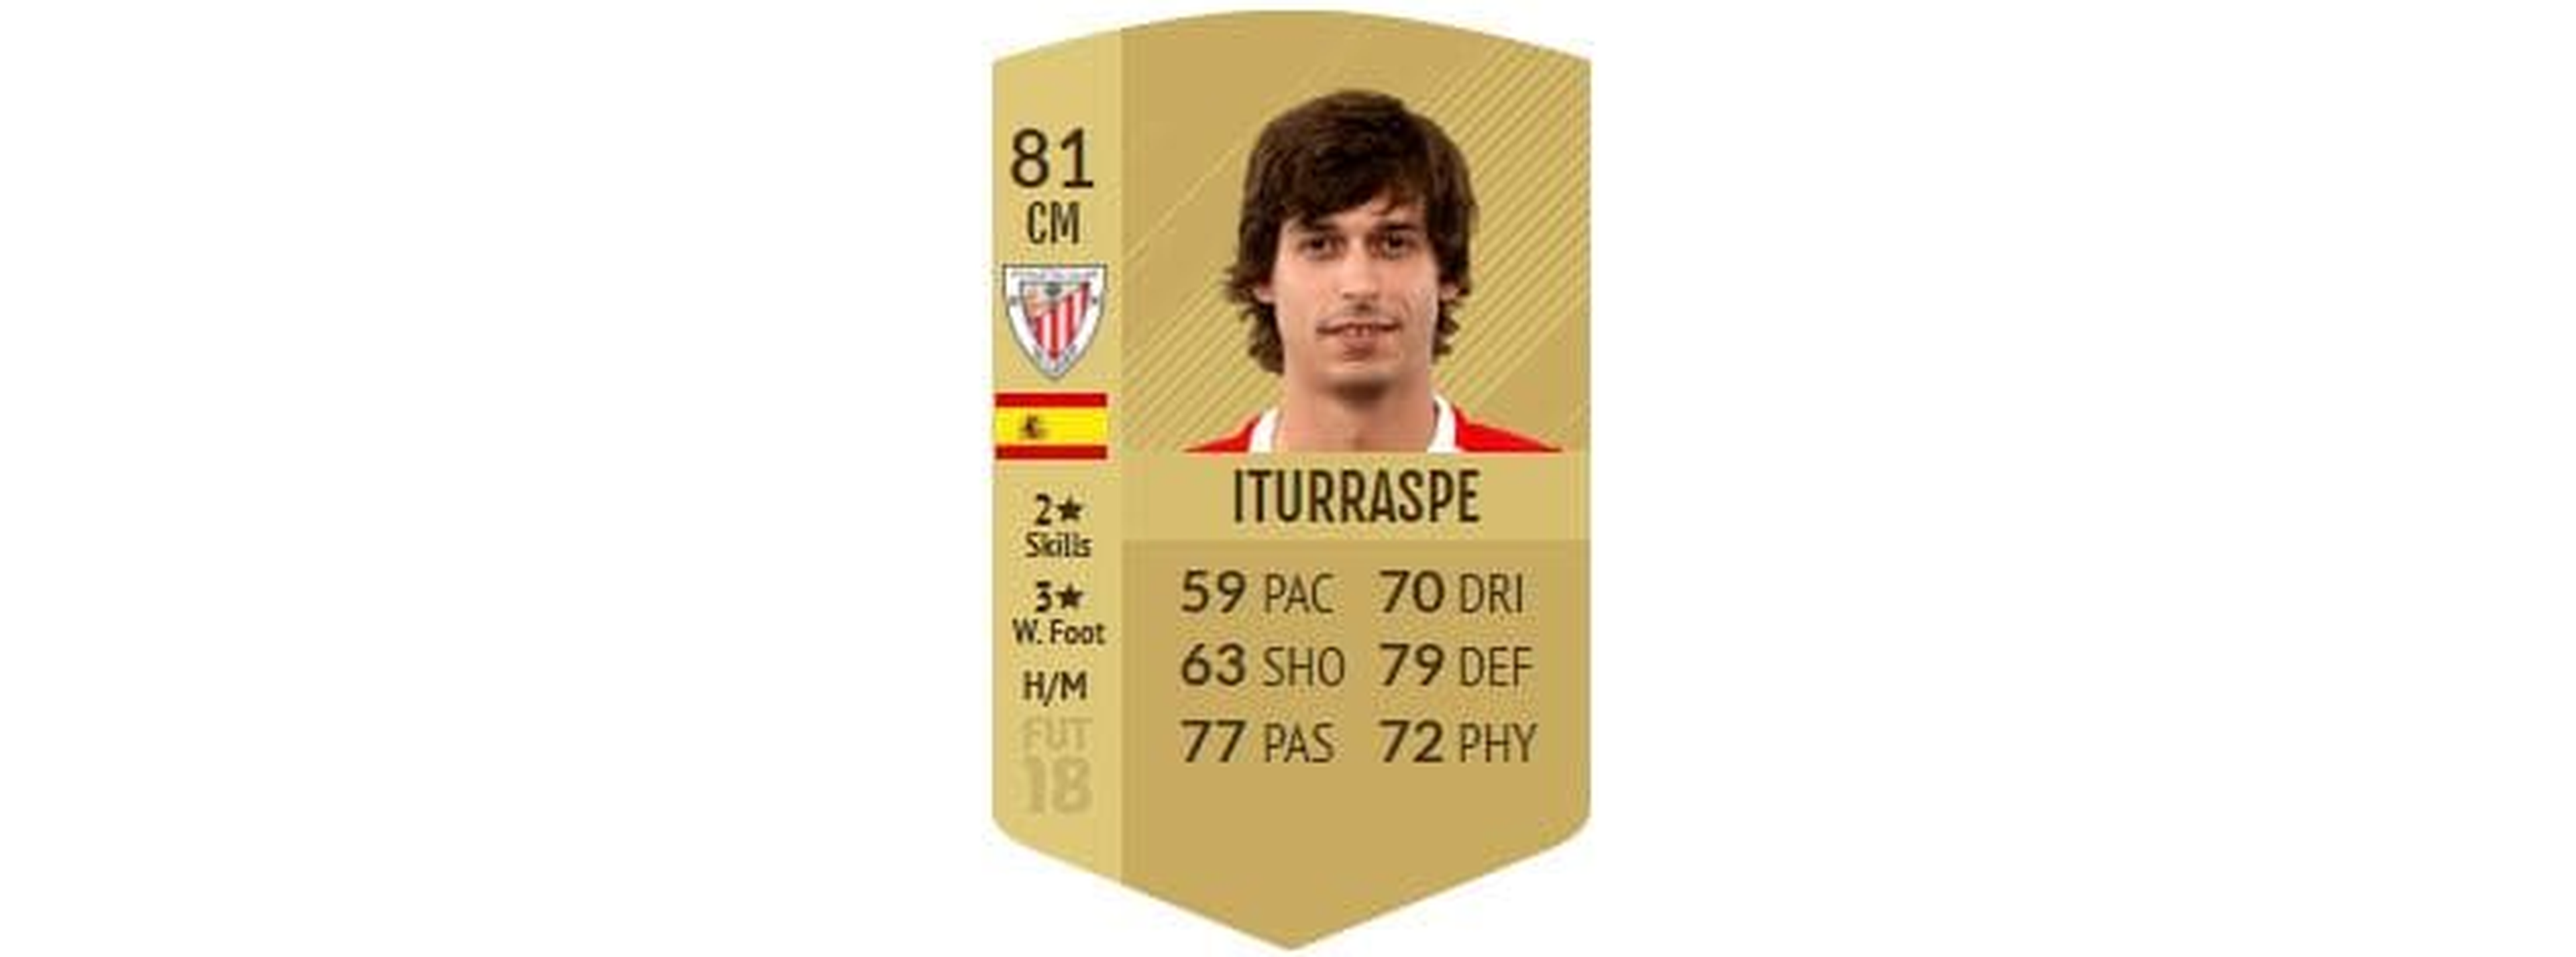 FIFA 18 - Iturraspe